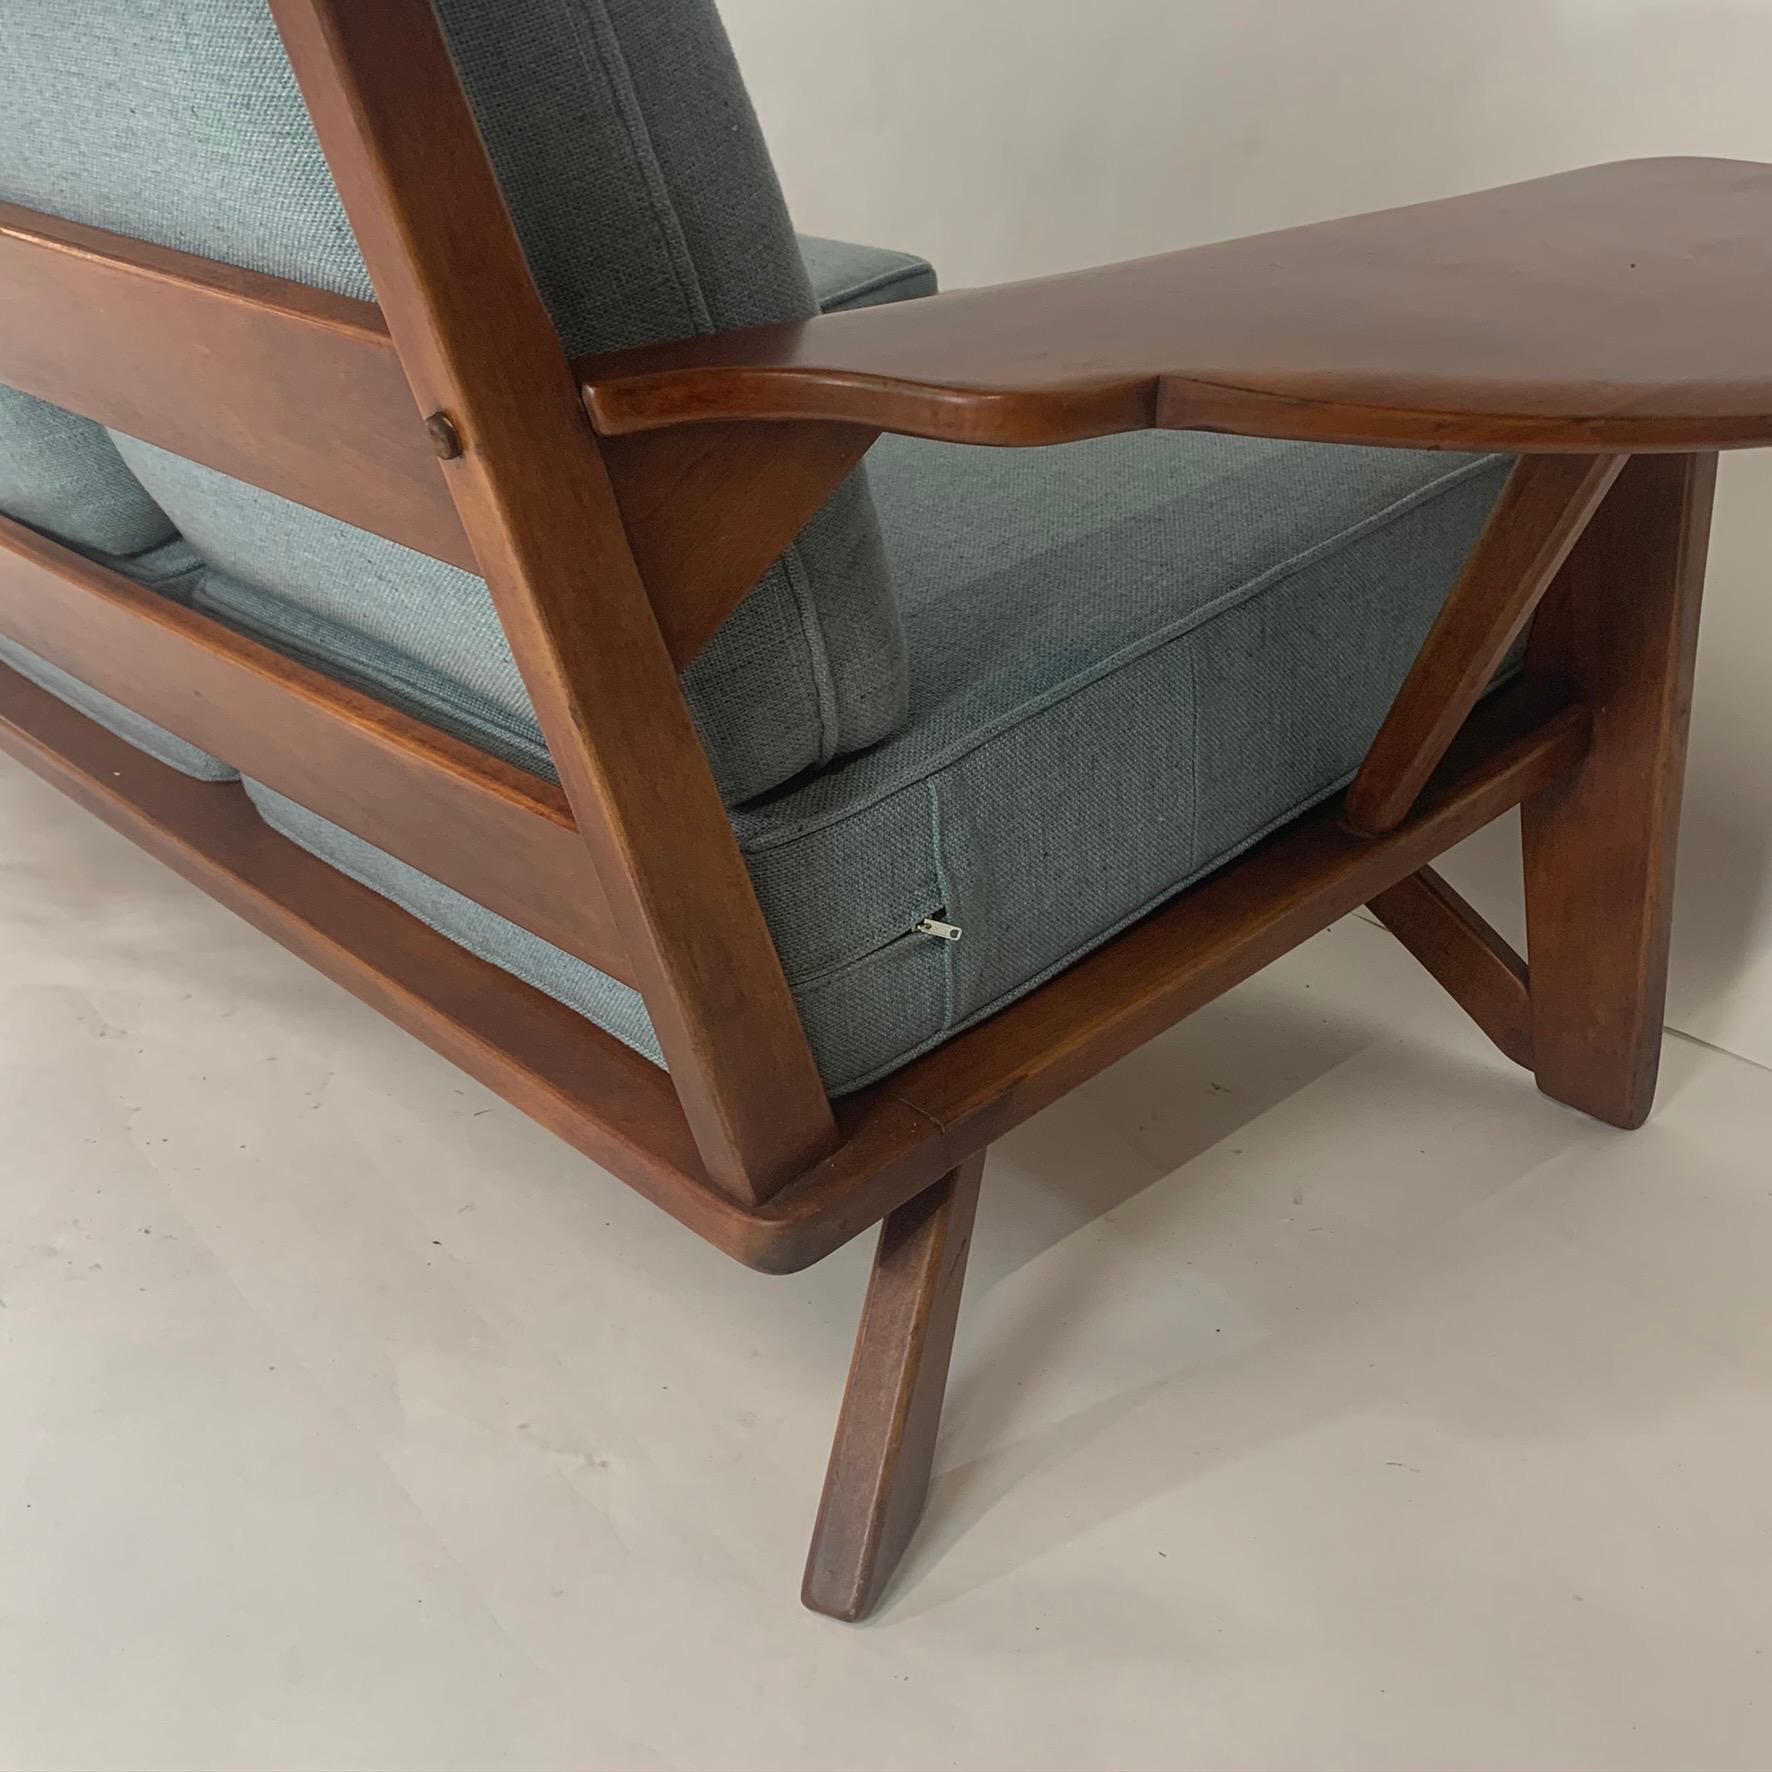 Impressive 1930s Cushman Maple Paddle Arm Sofa Designed by William DeVries 5